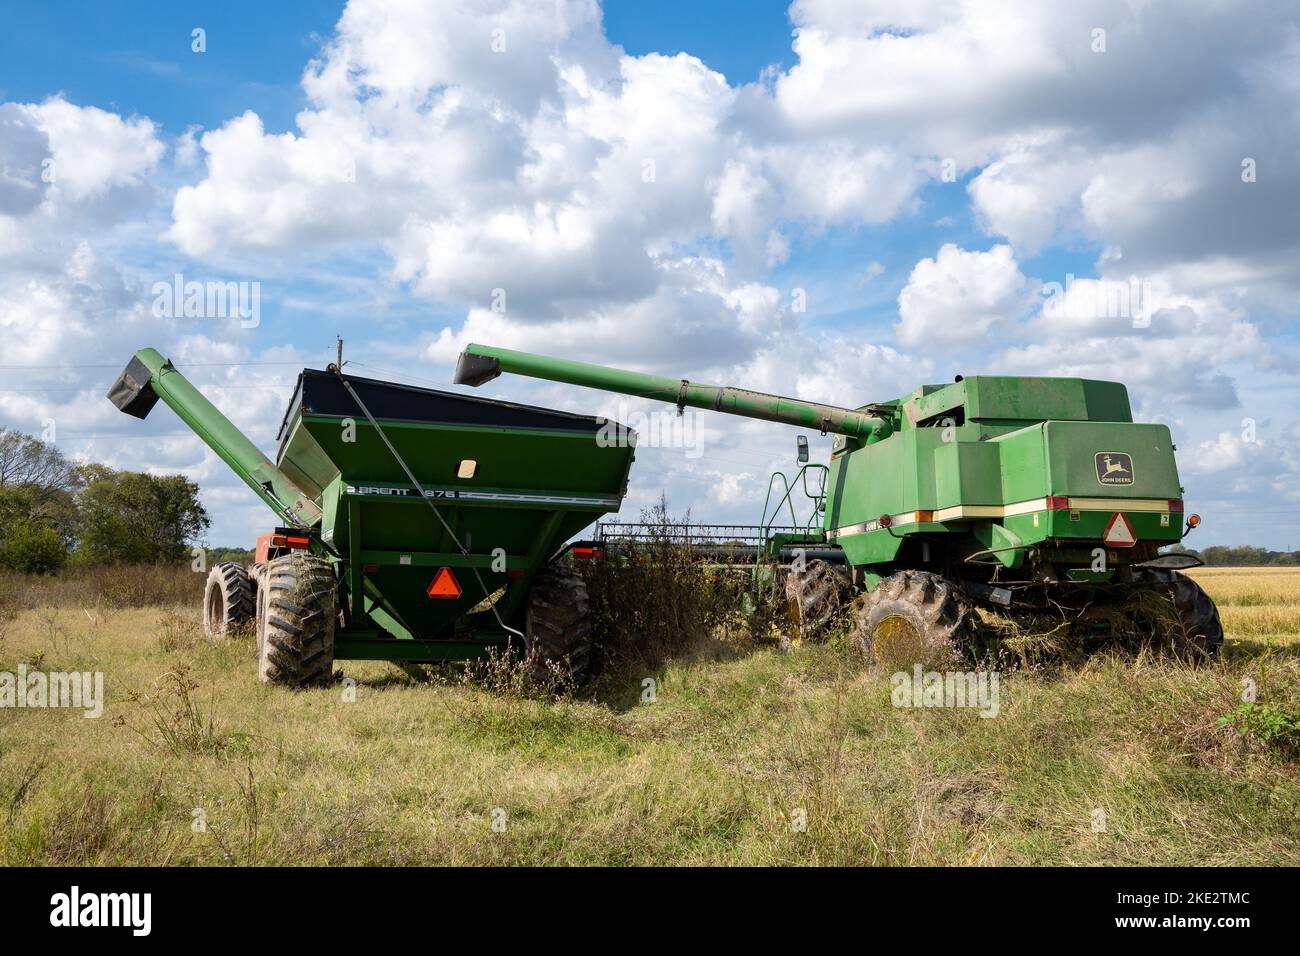 A farmer operating a John Deere combine harvesting rice in a rice field. Katy, Texas, USA. Stock Photo